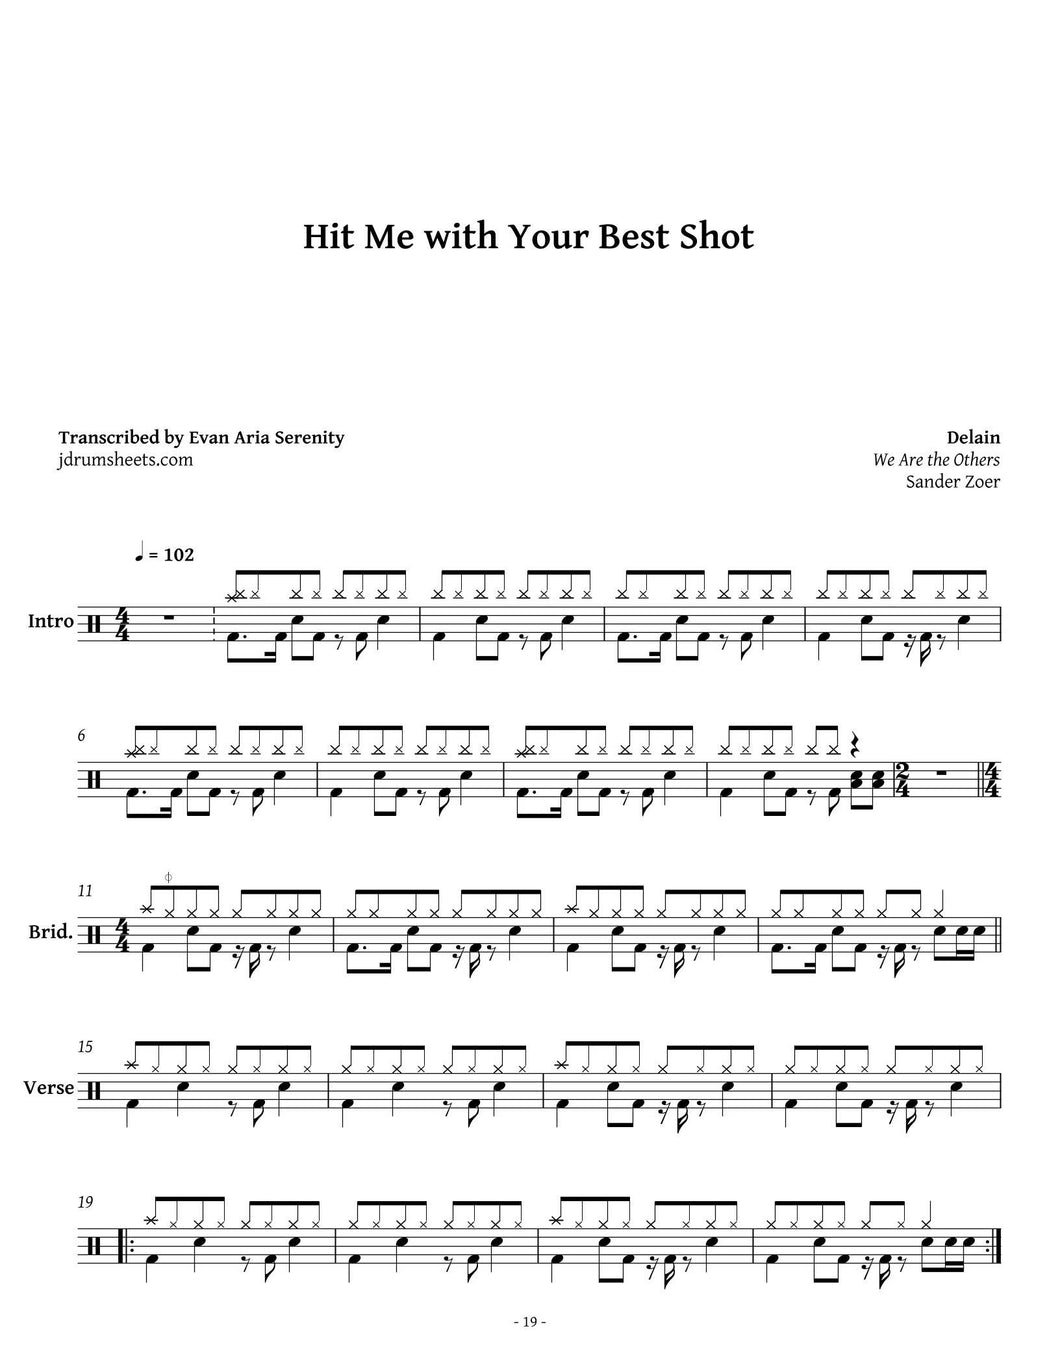 Hit Me with Your Best Shot - Delain - Full Drum Transcription / Drum Sheet Music - Jaslow Drum Sheets